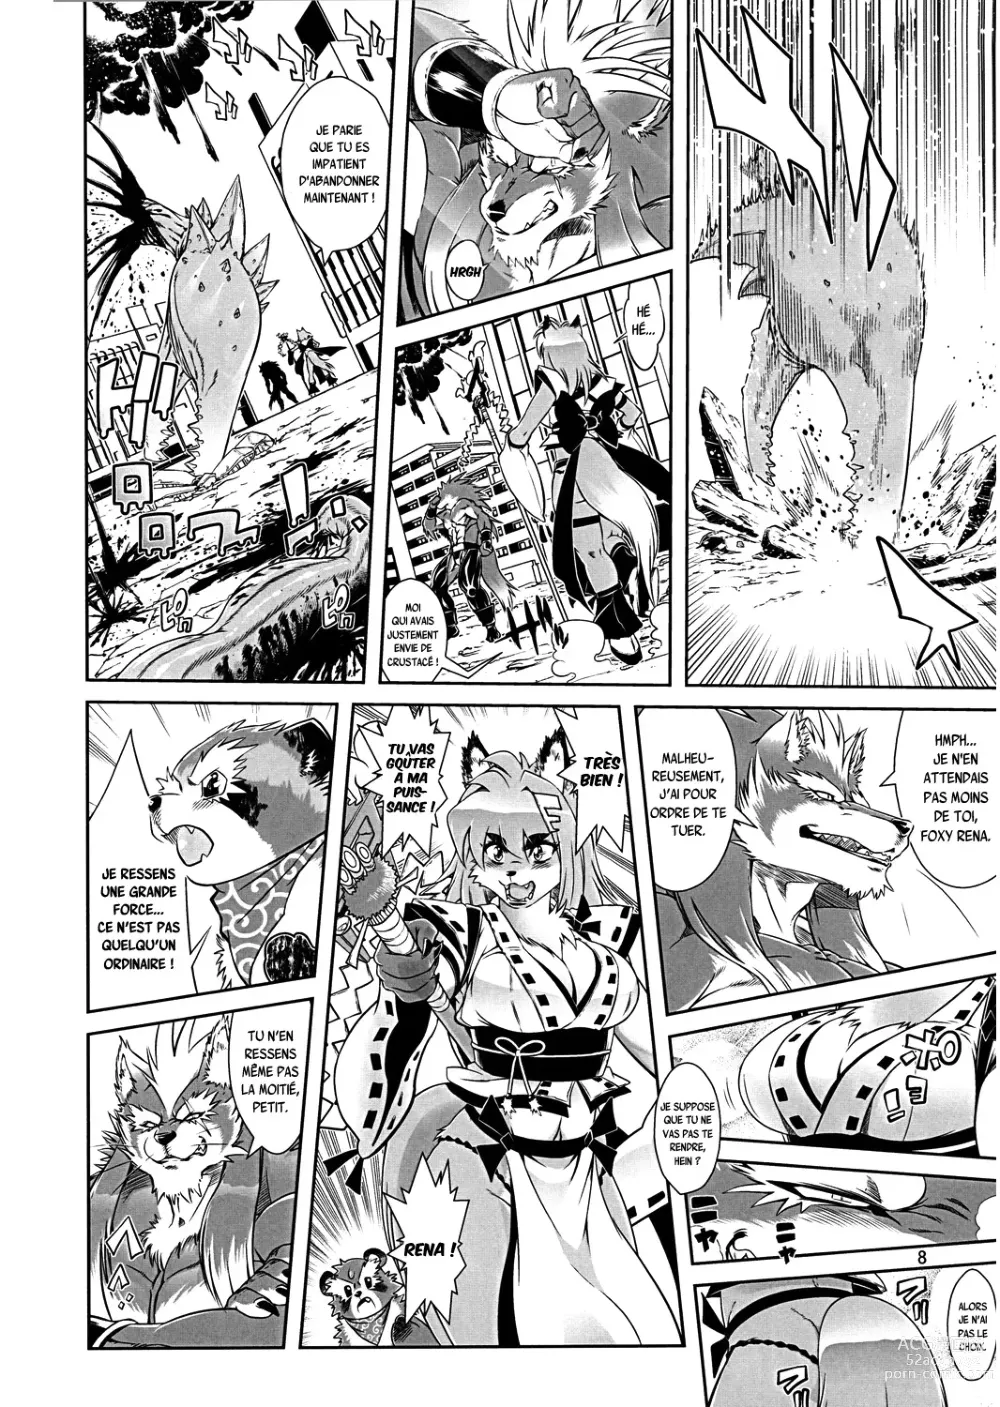 Page 8 of doujinshi Mahou no Juujin Foxy Rena 1